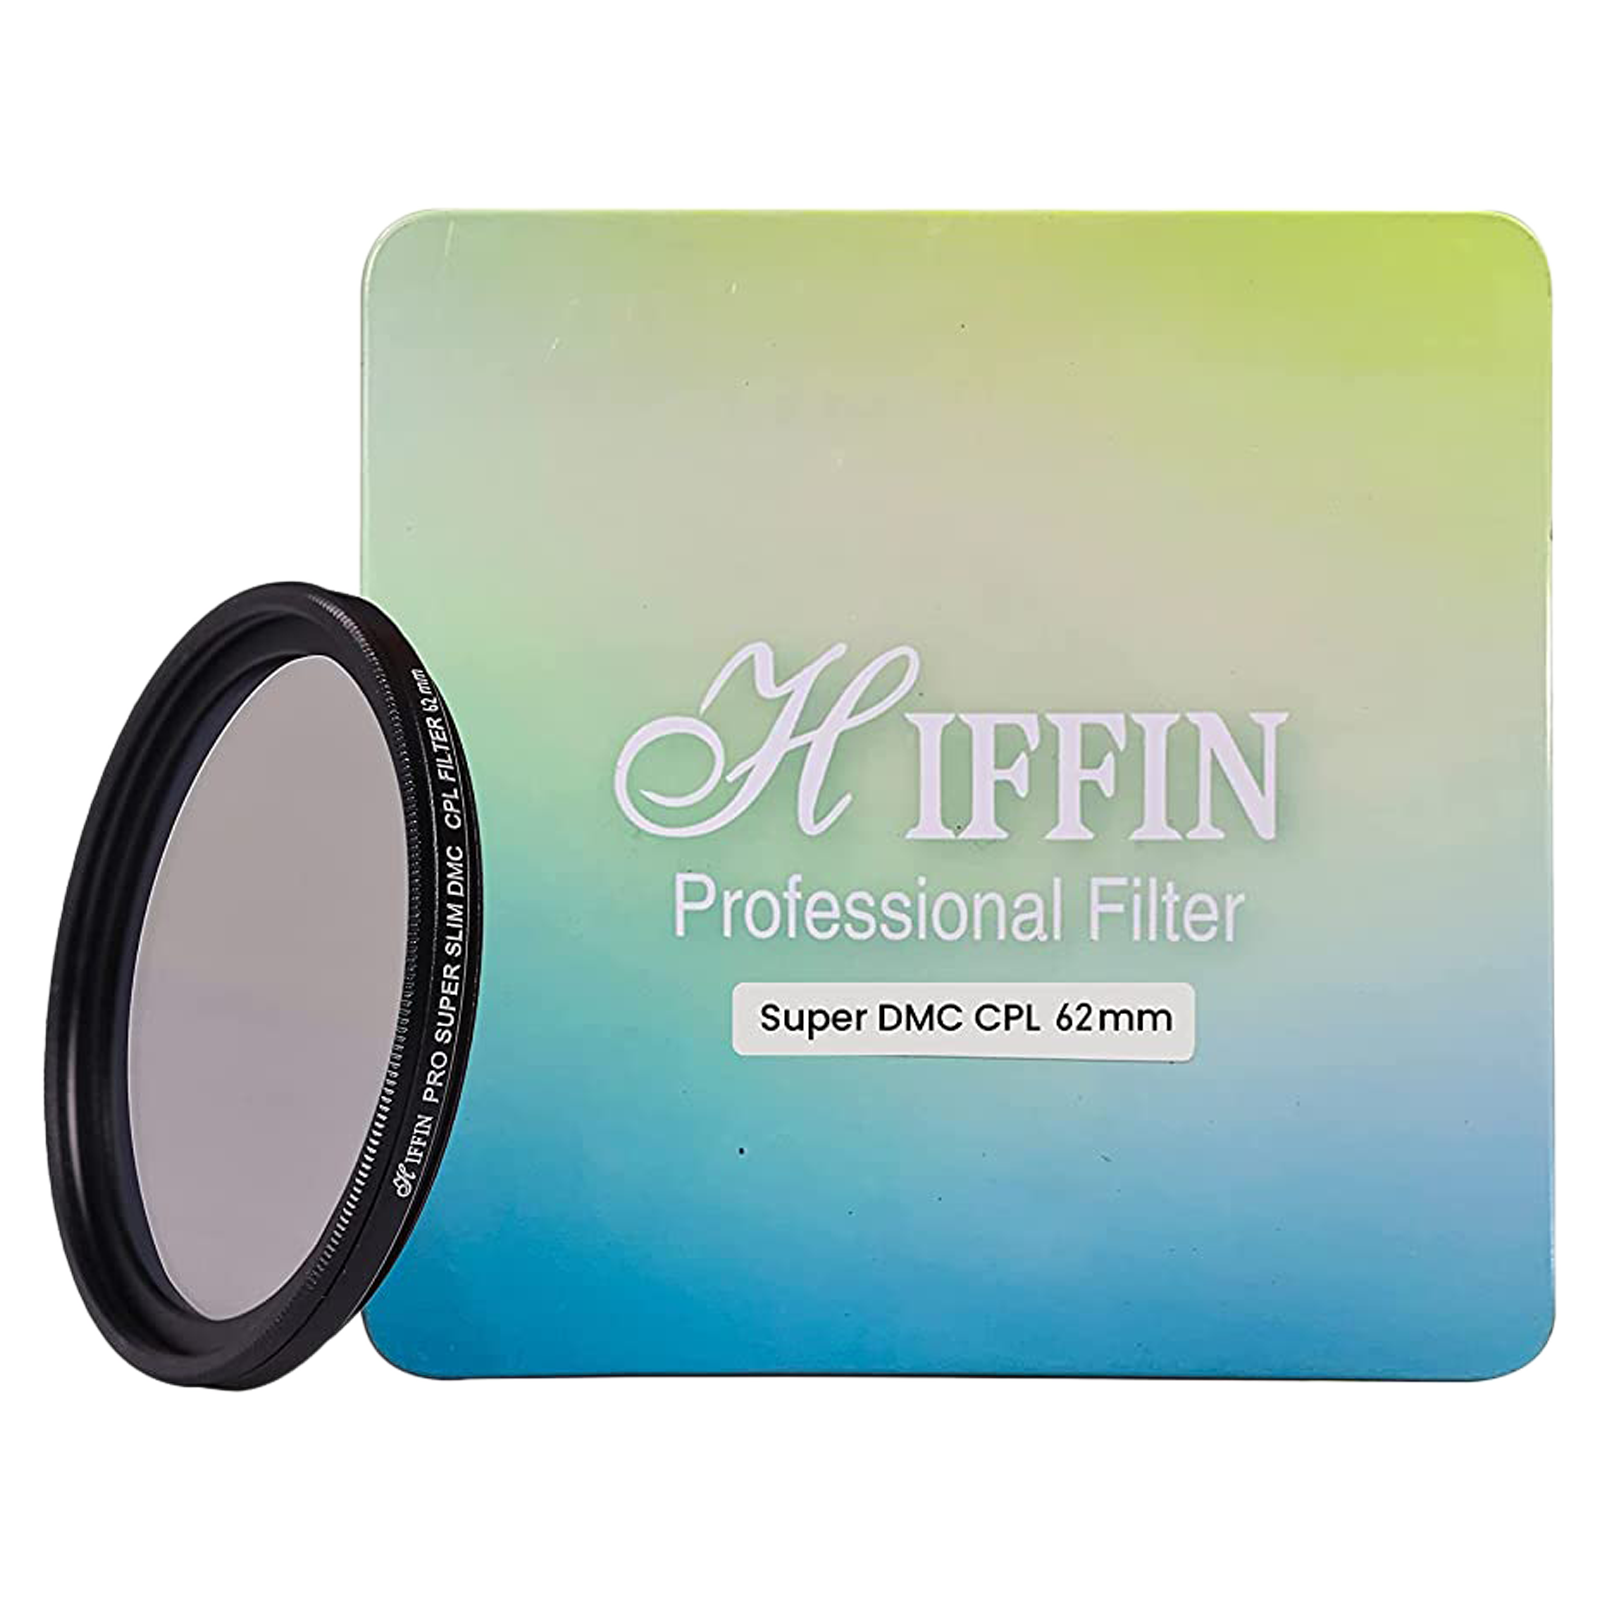 HIFFIN SUPER DMC CPL 62mm Camera Lens Polarizer Filter (18 Layers Super Slim Multi-Coating)